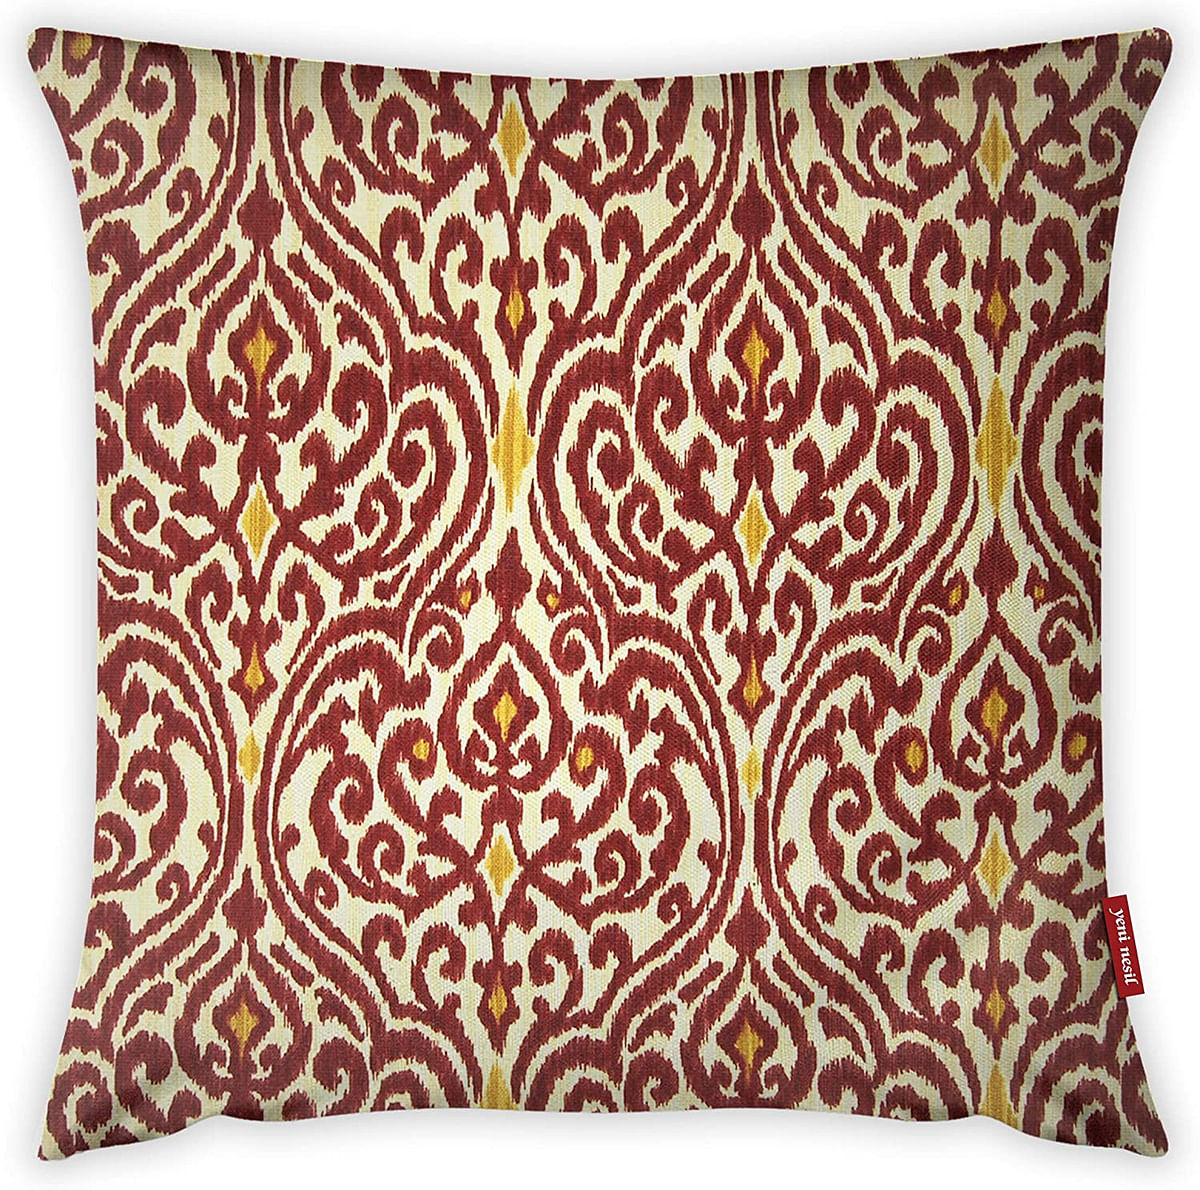 Mon Desire Double Side Printed Decorative Throw Pillow Cover, Multi-Colour, 44L x 44W cm, MDSYST4001